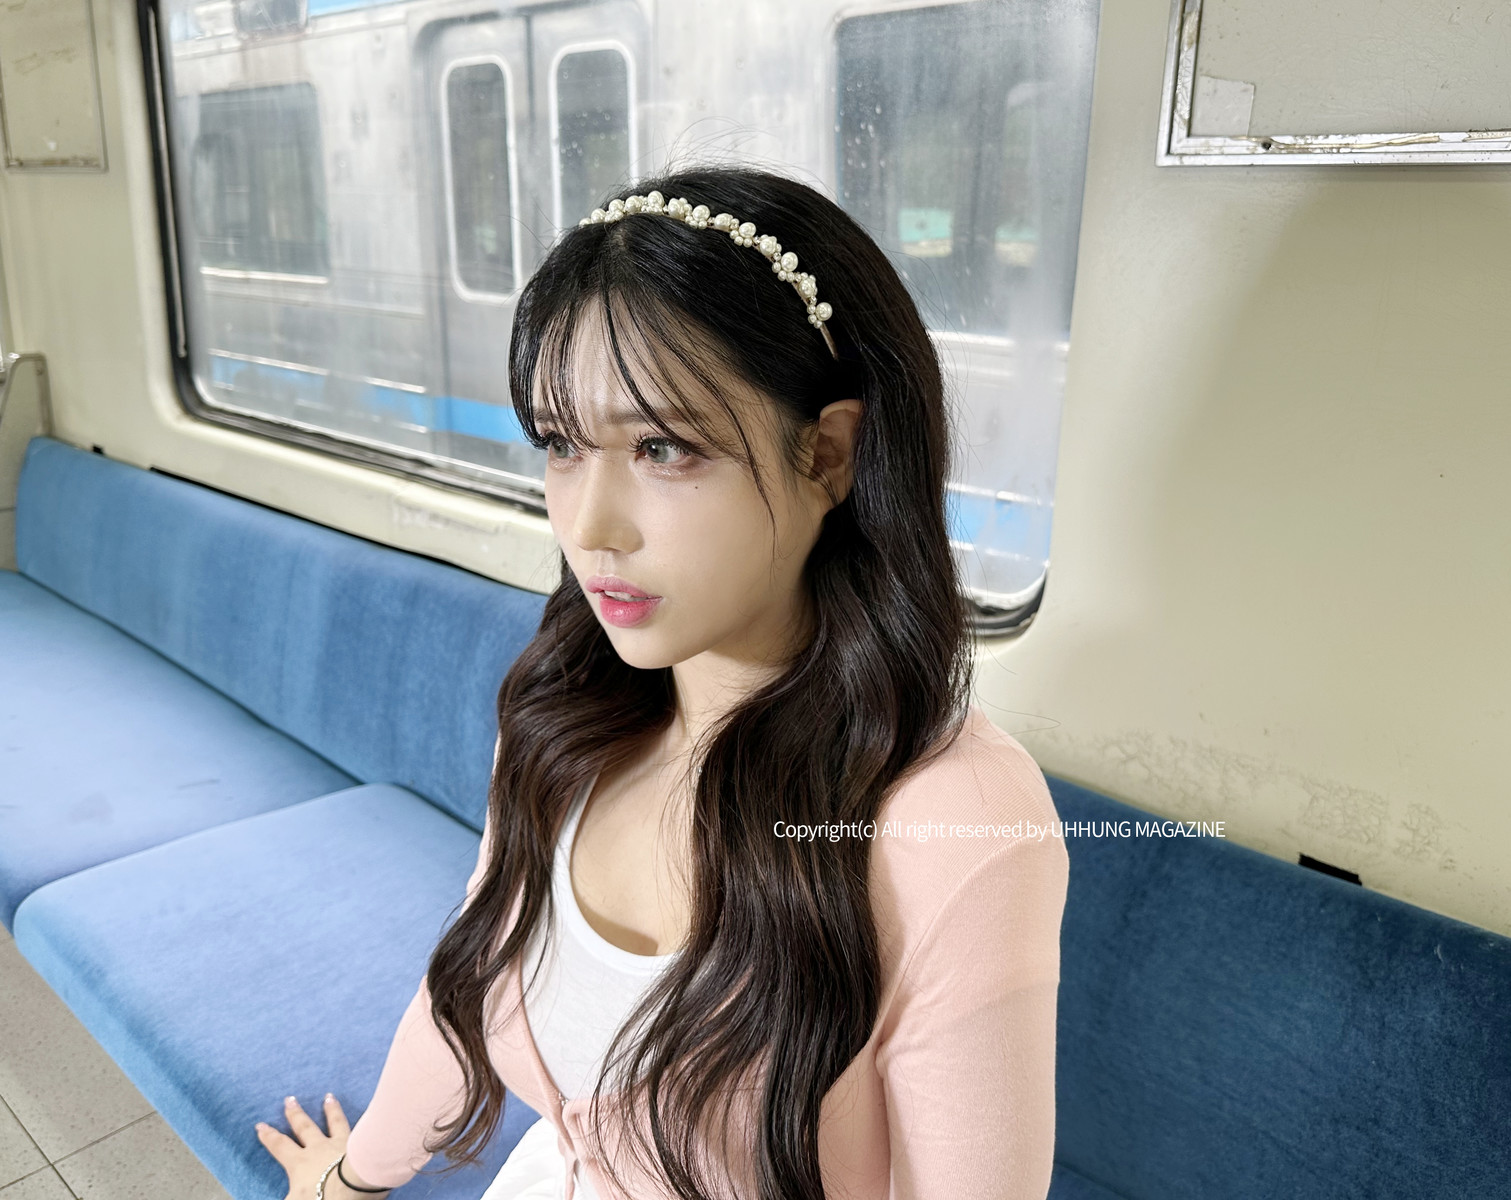 Hani 하니, UHHUNG Magazine “The Girlfriend on The Subway” Set.01